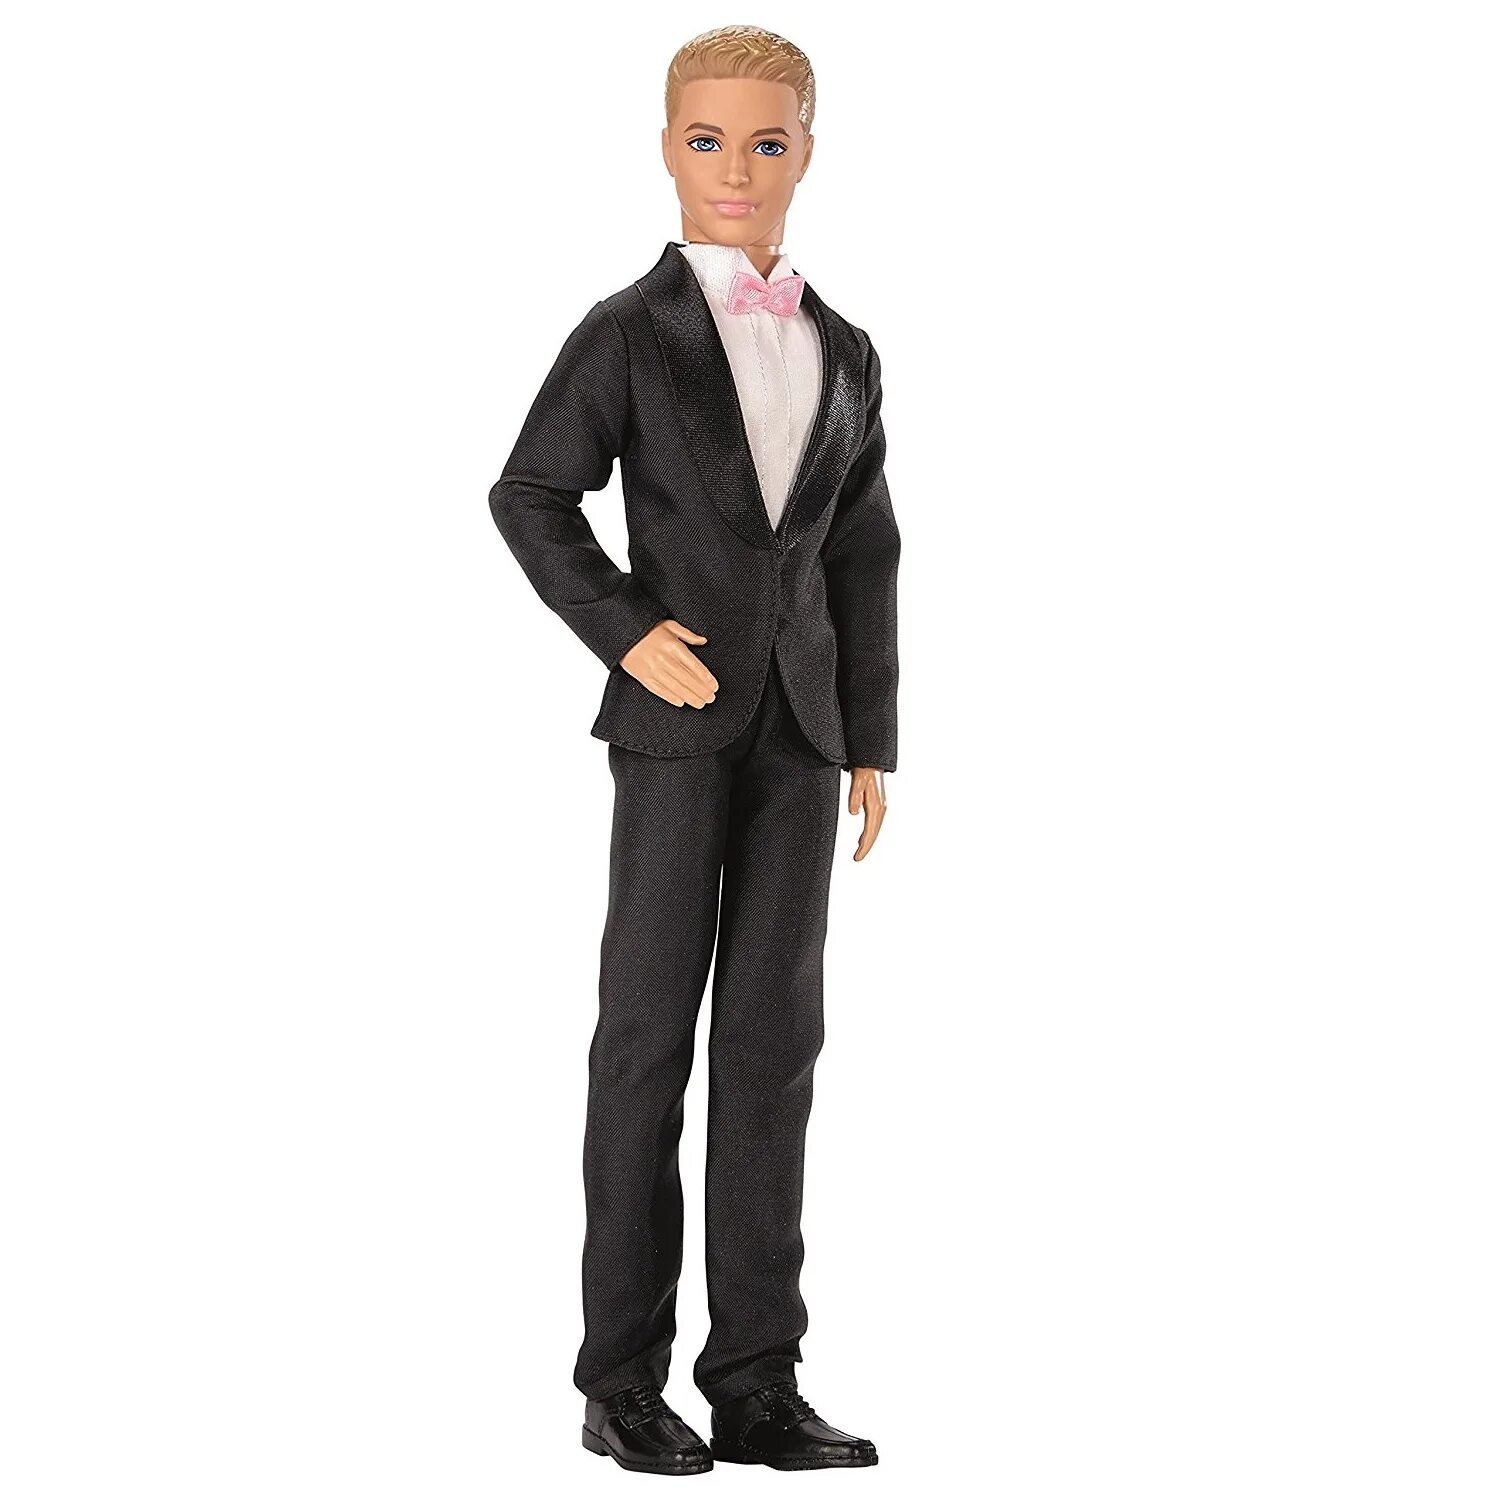 Кукла парень купить. Кен кукла Маттел. Dvp39 Barbie Кен. Кукла Barbie Кен-жених. Кукла Барби Кен жених.